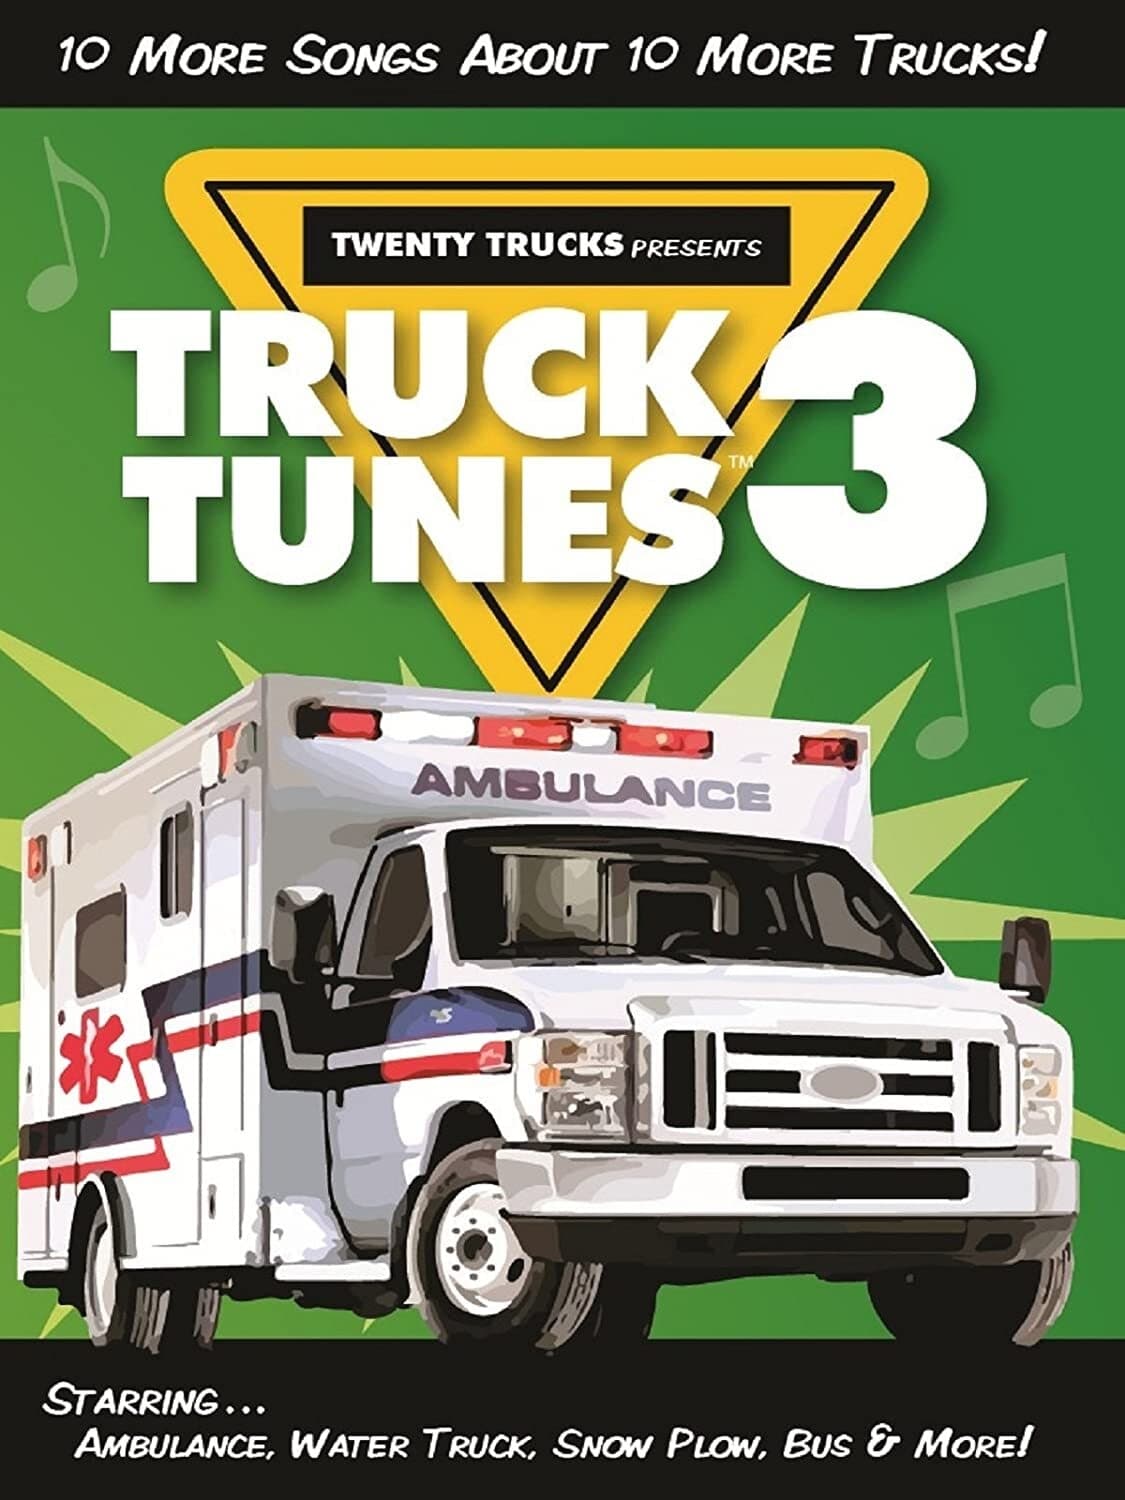 Truck Tunes 3